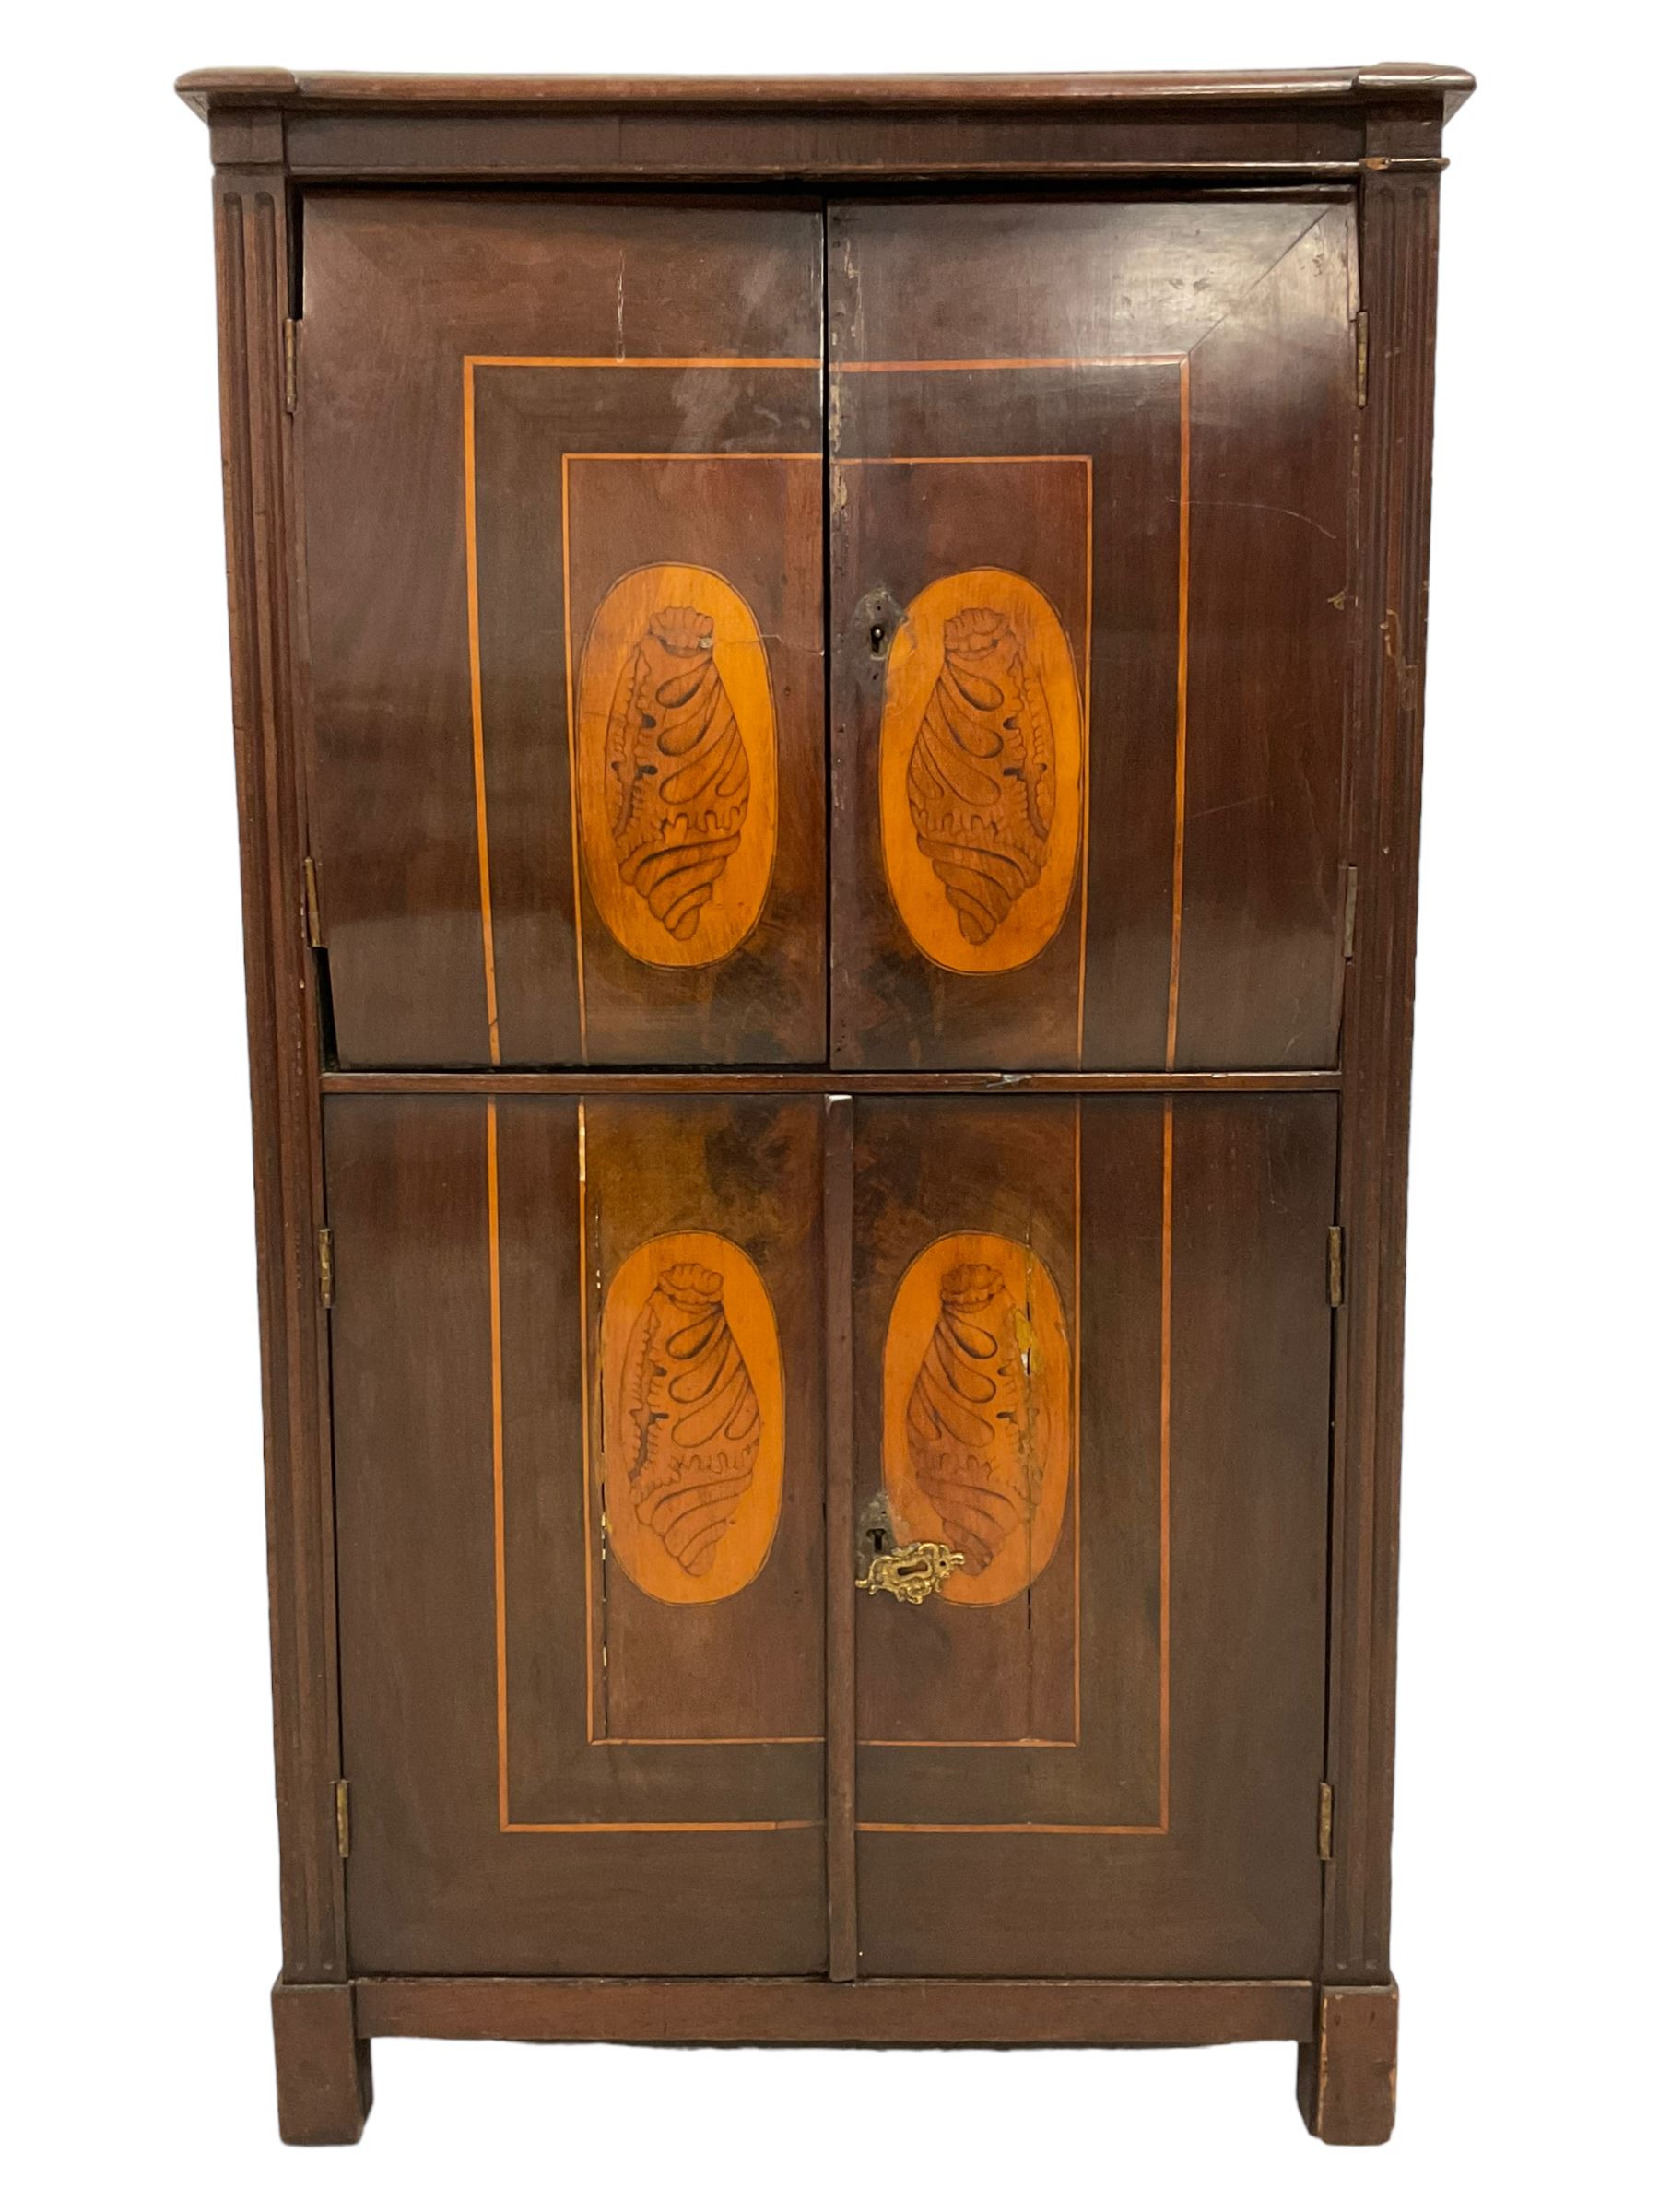 19th century inlaid mahogany cupboard